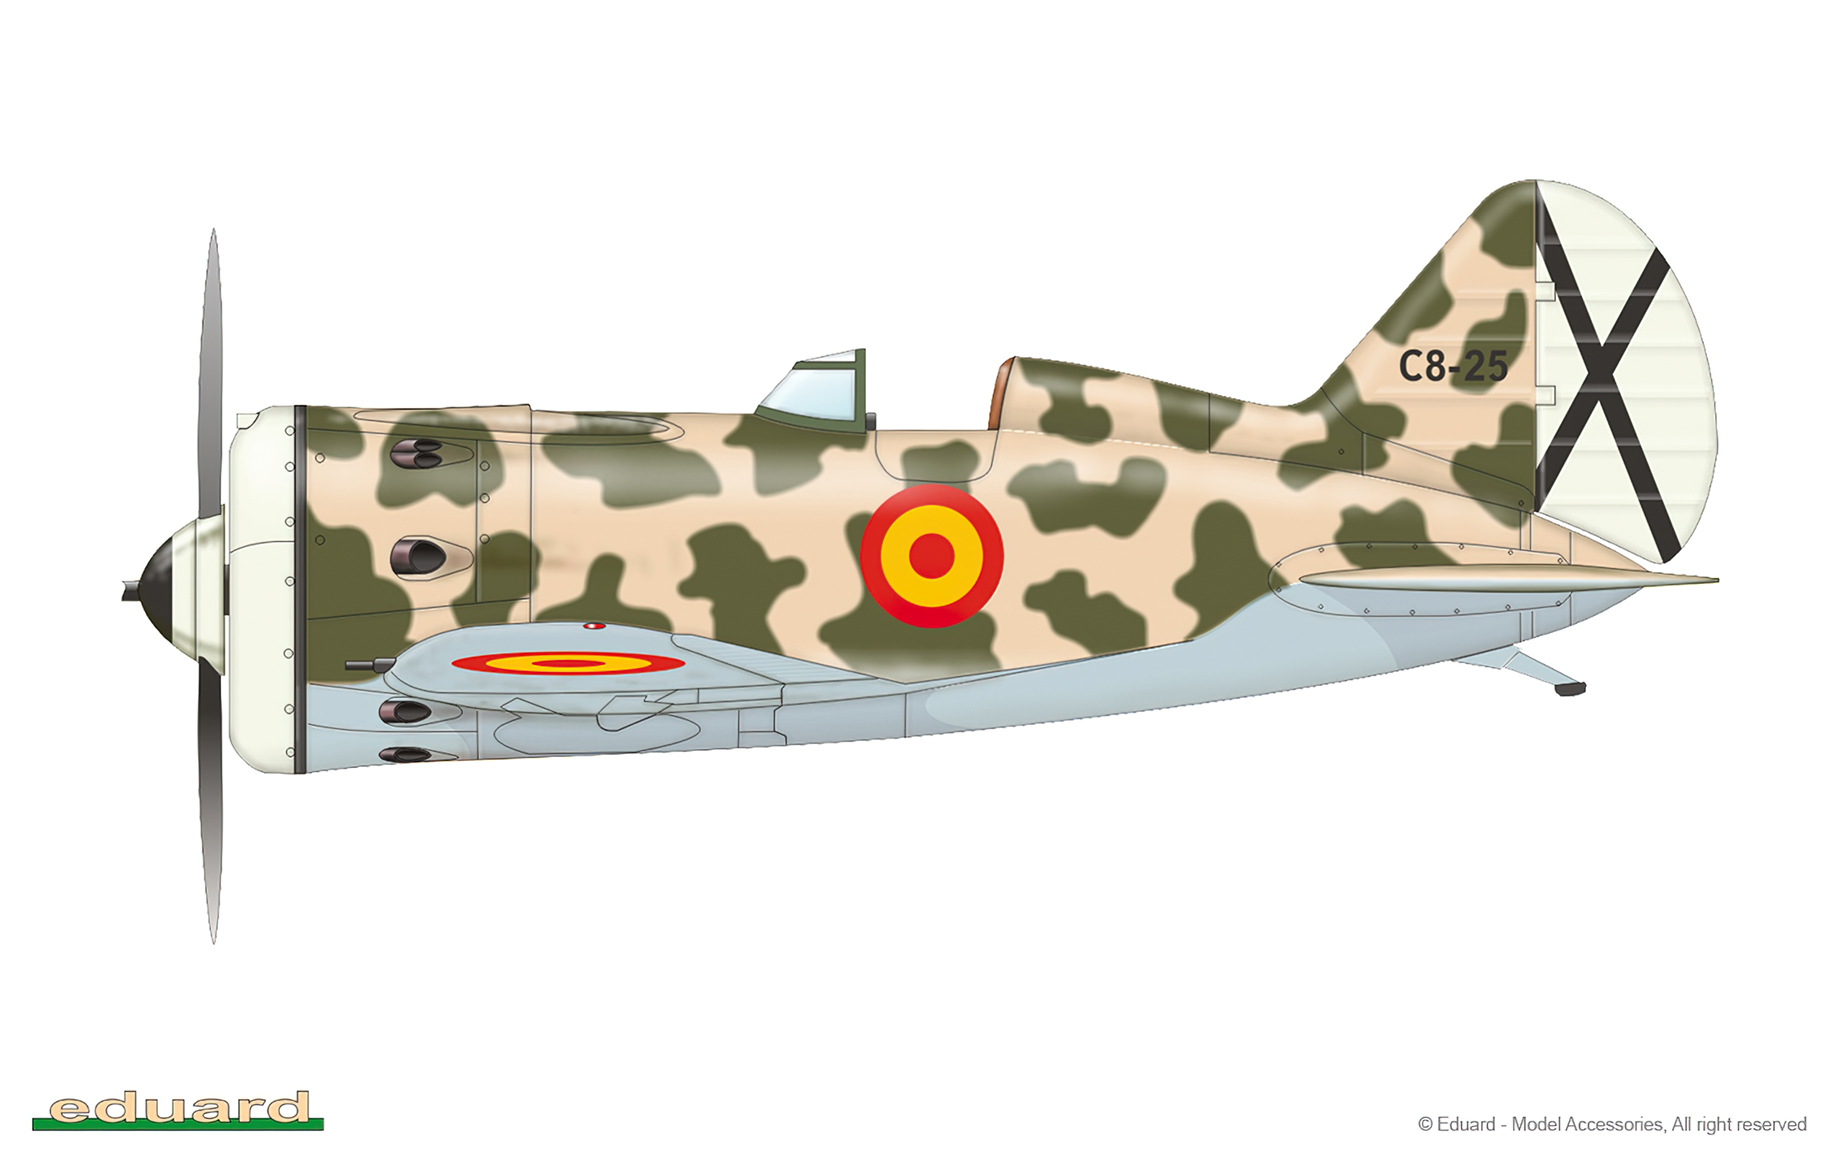 SCW Polikarpov I 16 Nationalist C8 25 Moron Fighter School Moron AB Spain 1949 profile by Eduard 0A